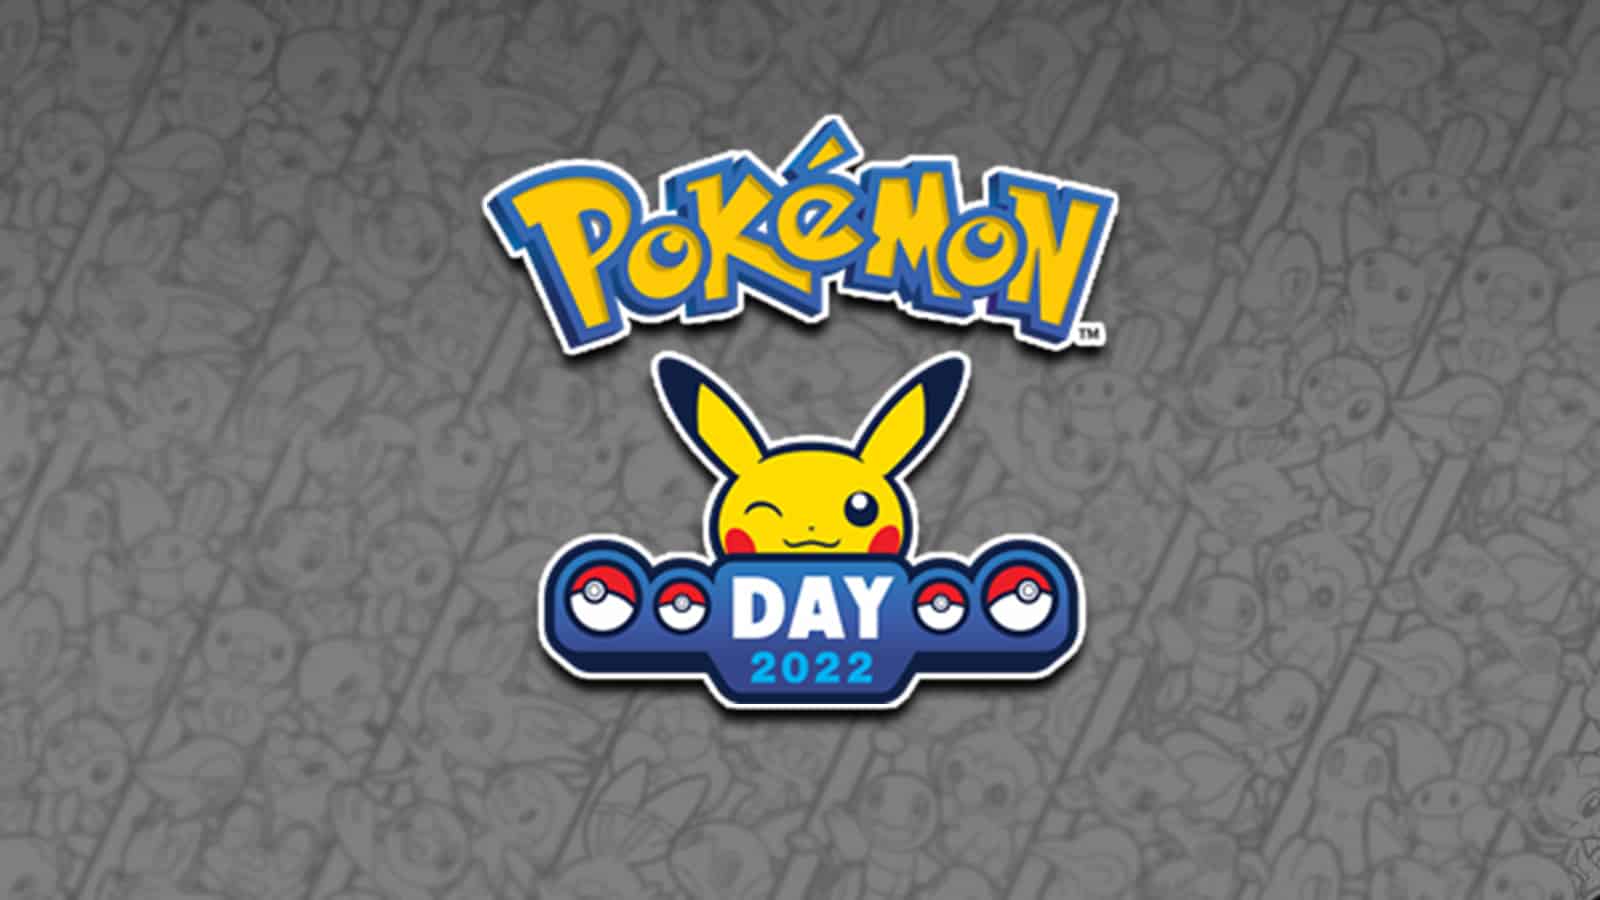 Pokemon Day 2022 wallpaper screenshot.